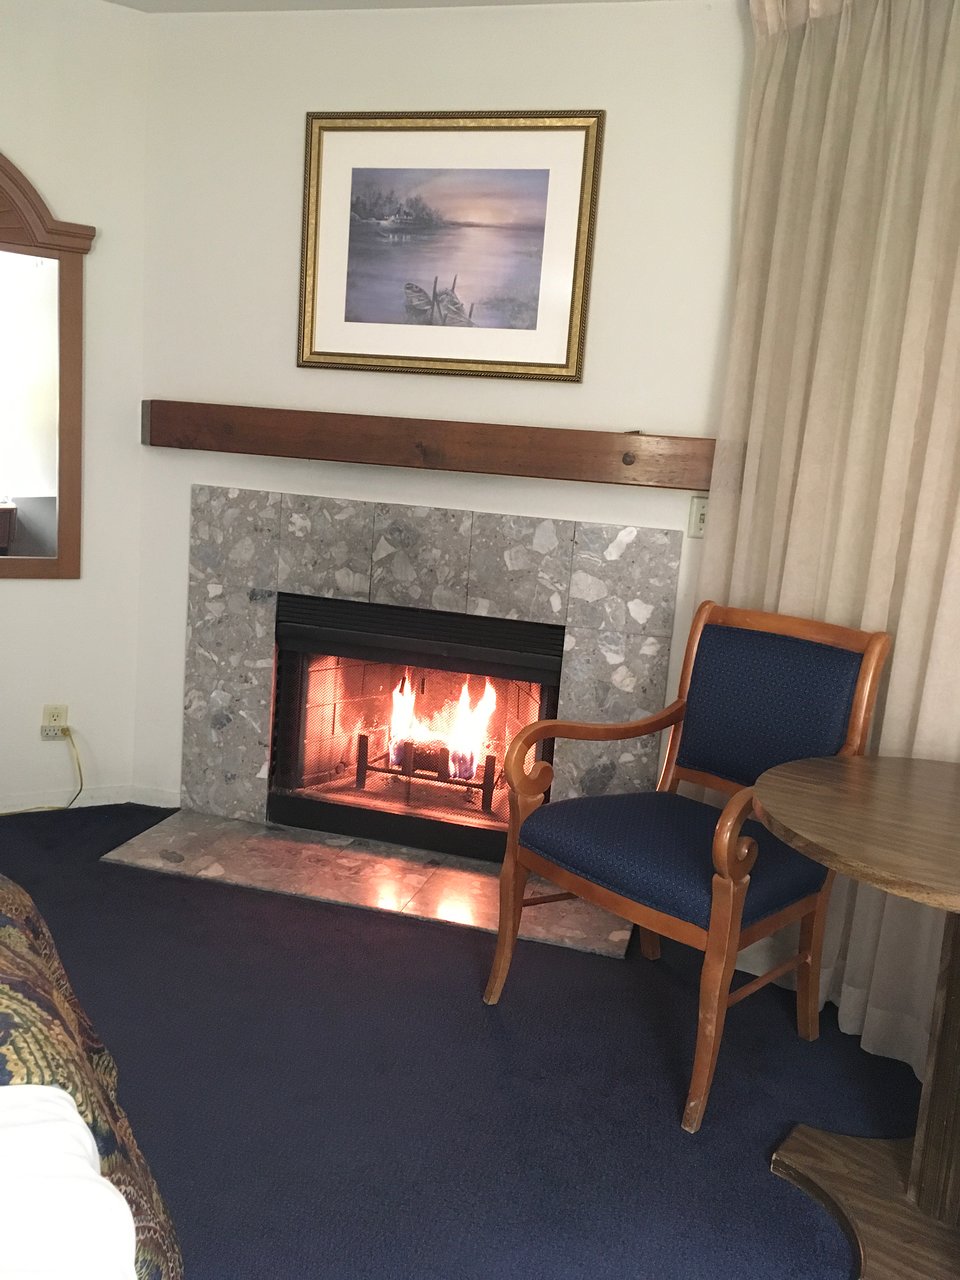 Fireplace Denver Awesome Monarch Resort 2 ÐÐ°ÑÐ¸ÑÐ¸Ðº ÐÑÐ¾ÑÐ² Ð¾ÑÐ·ÑÐ²Ñ ÑÐ¾ÑÐ¾ Ð¸ ÑÑÐ°Ð²Ð½ÐµÐ½Ð¸Ðµ